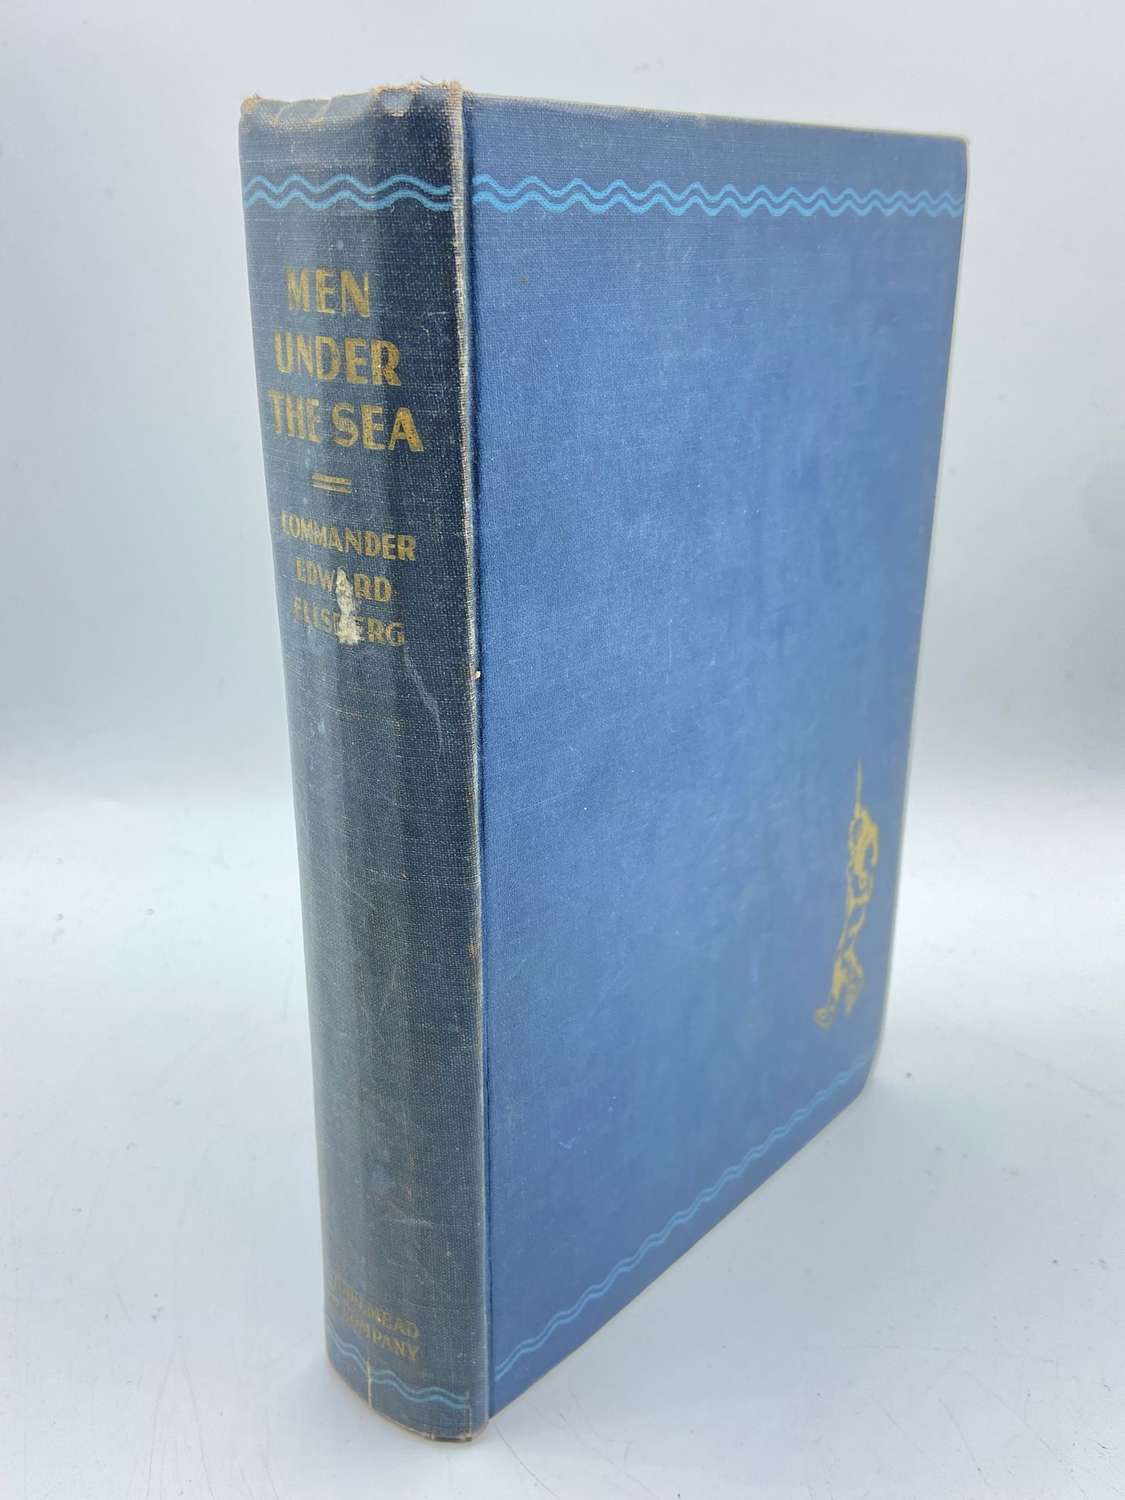 WW2 Men Under The Sea By Commander Edward Ellsberg Published 1939